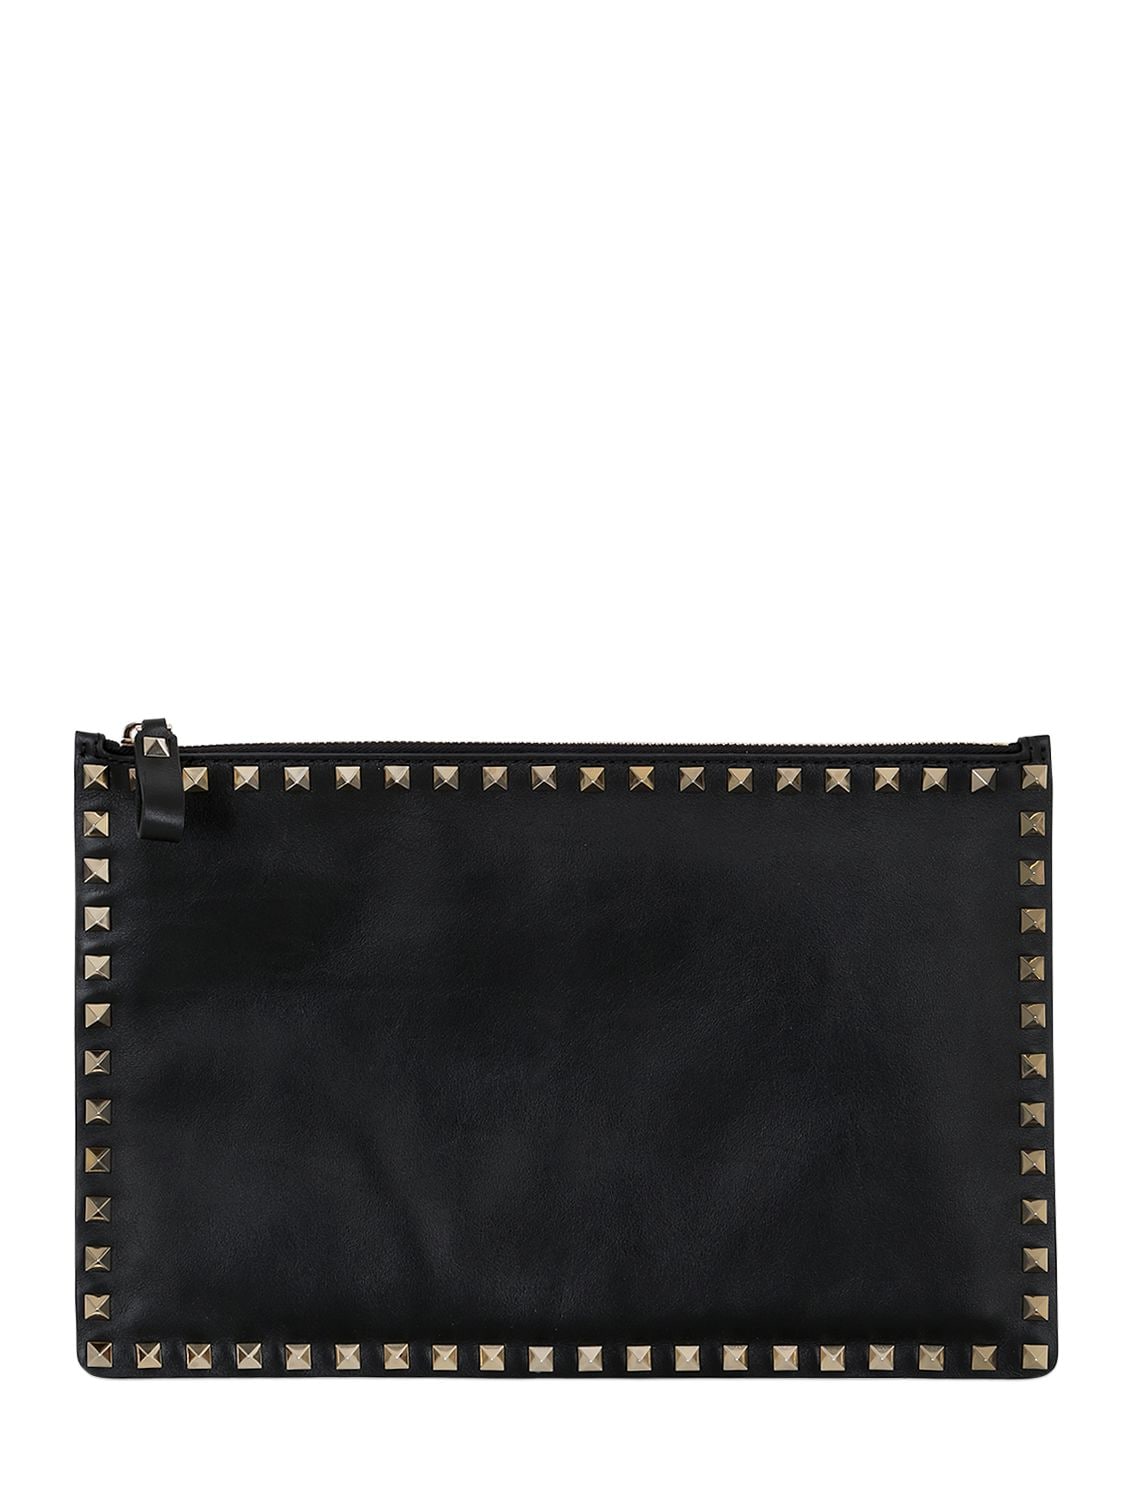 Valentino Garavani Medium Rockstud Leather Pouch In Black